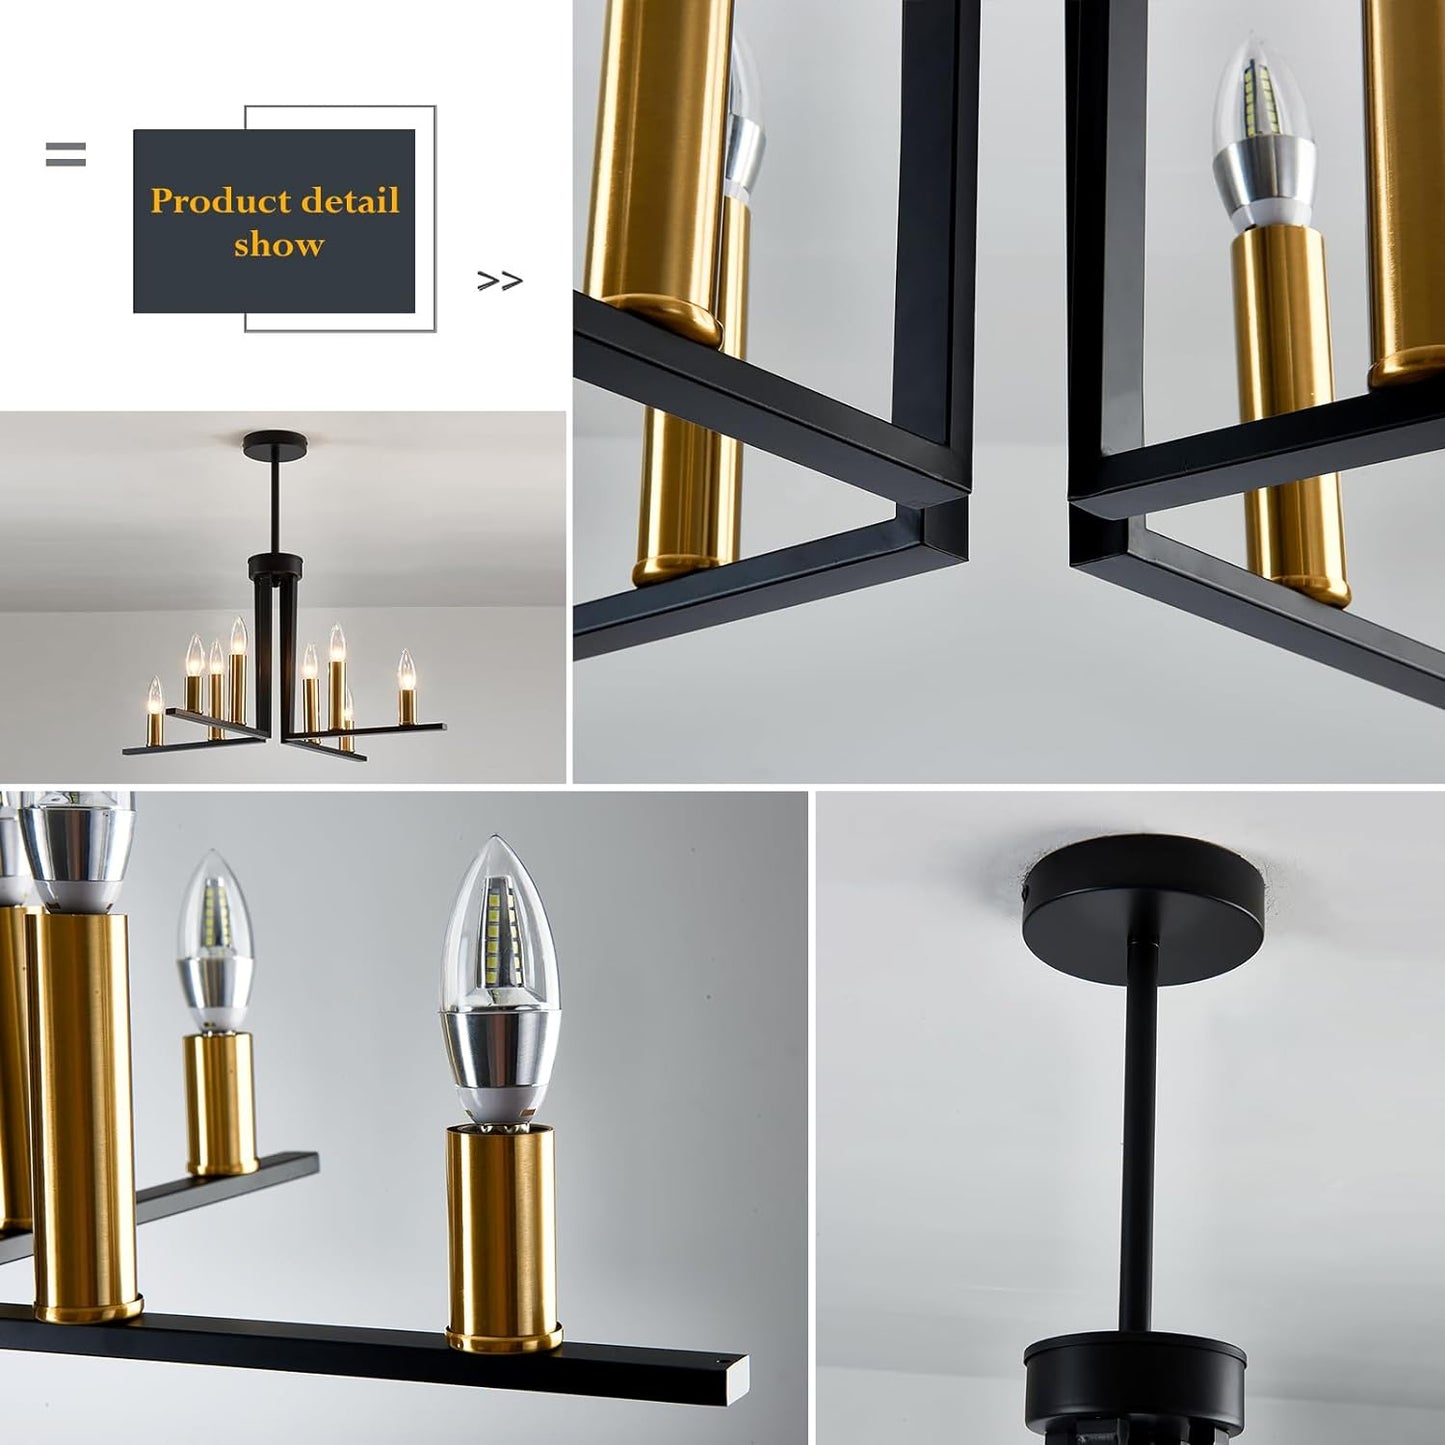 AvaMalis A|M Lighting 8 Light Modern Chandelier Black and Gold Metal Semi Flush Mount Ceiling Light Fixture Industrial